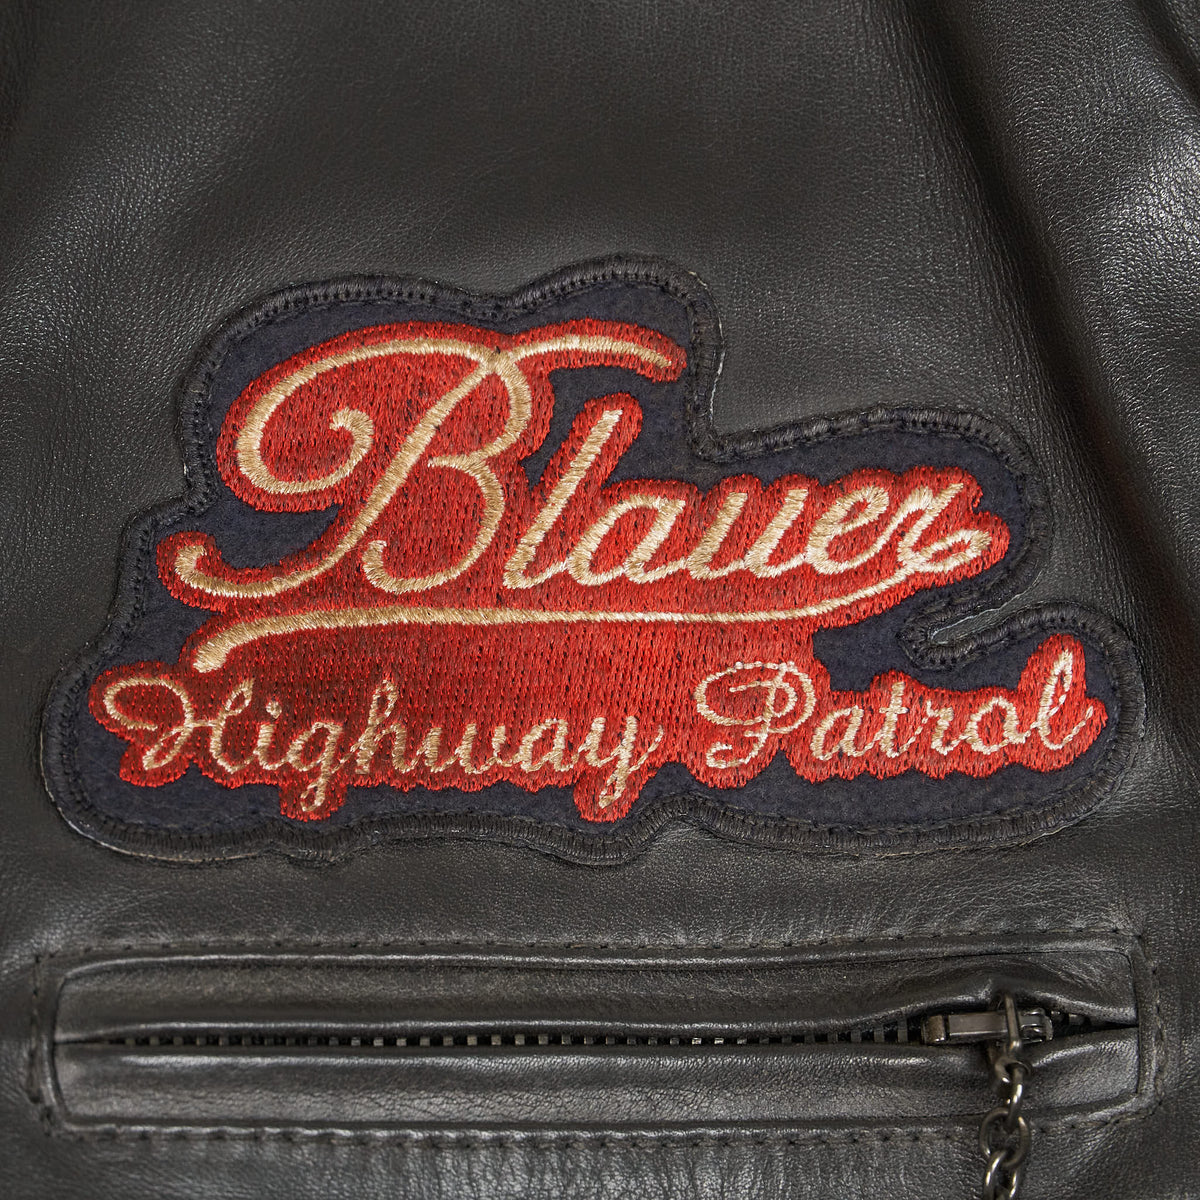 Blauer Café Racer Highway Patrol Jacket